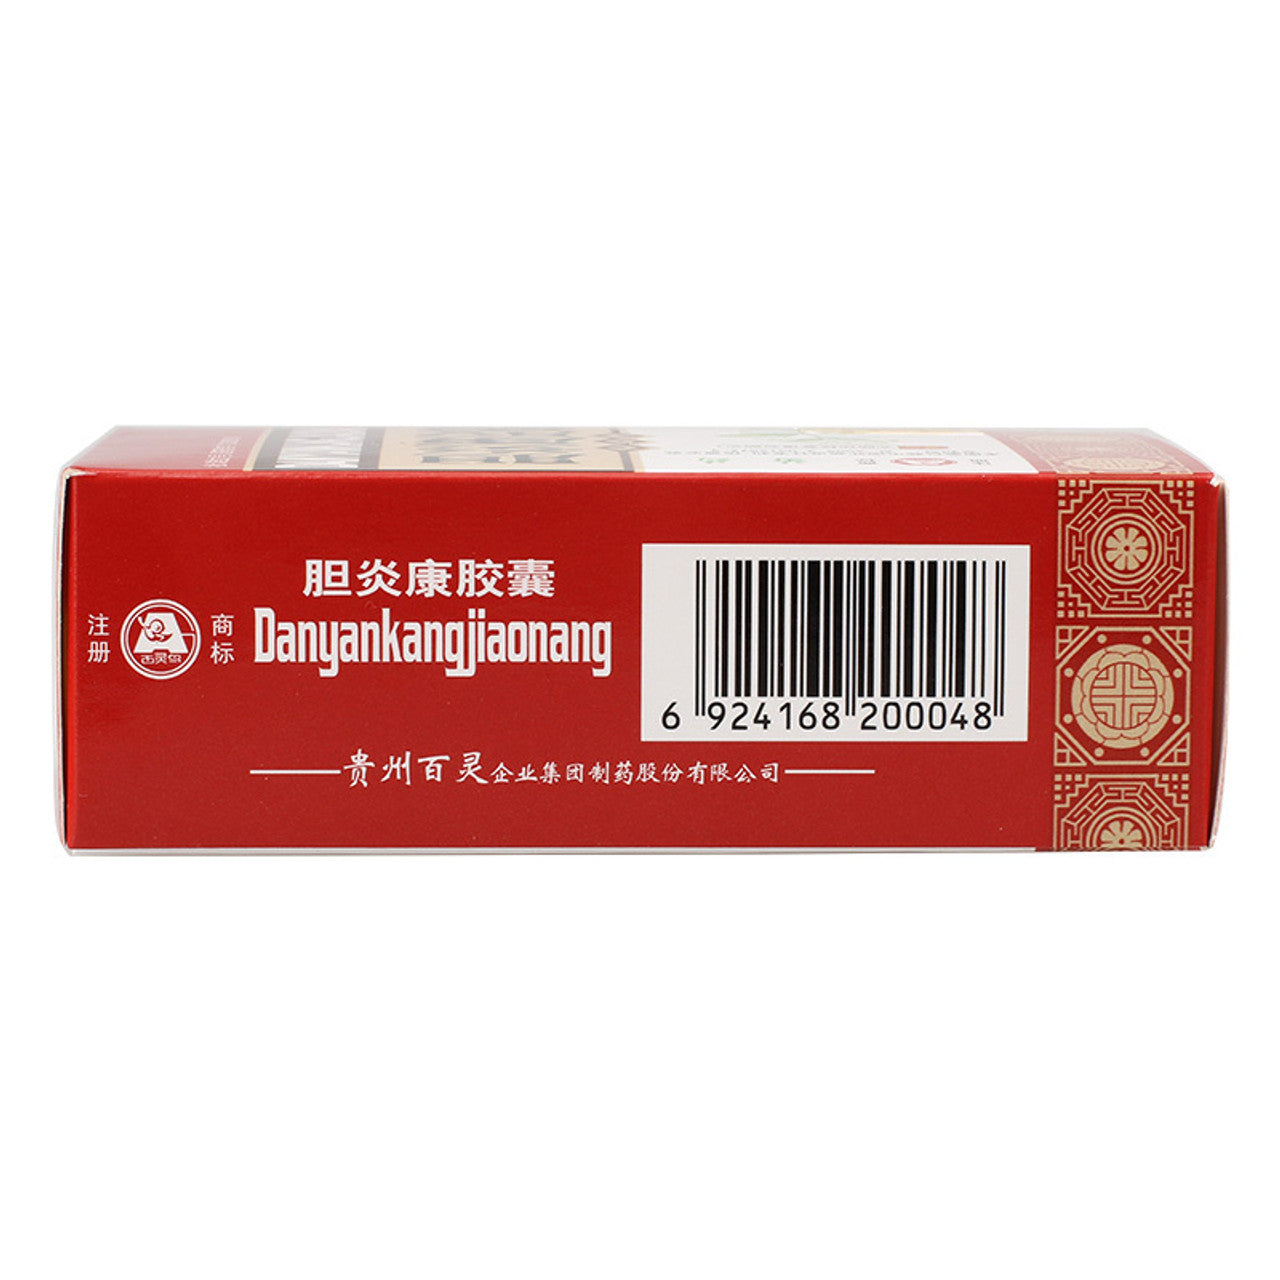 China Herb. Brand BAILINGNIAO. Danyankang Jiaonang or Dan Yan Kang Jiao Nang or Danyankang capsule For acute and chronic cholecystitis, cholangitis, cholelithiasis, and post-gallbladder surgery syndrome.